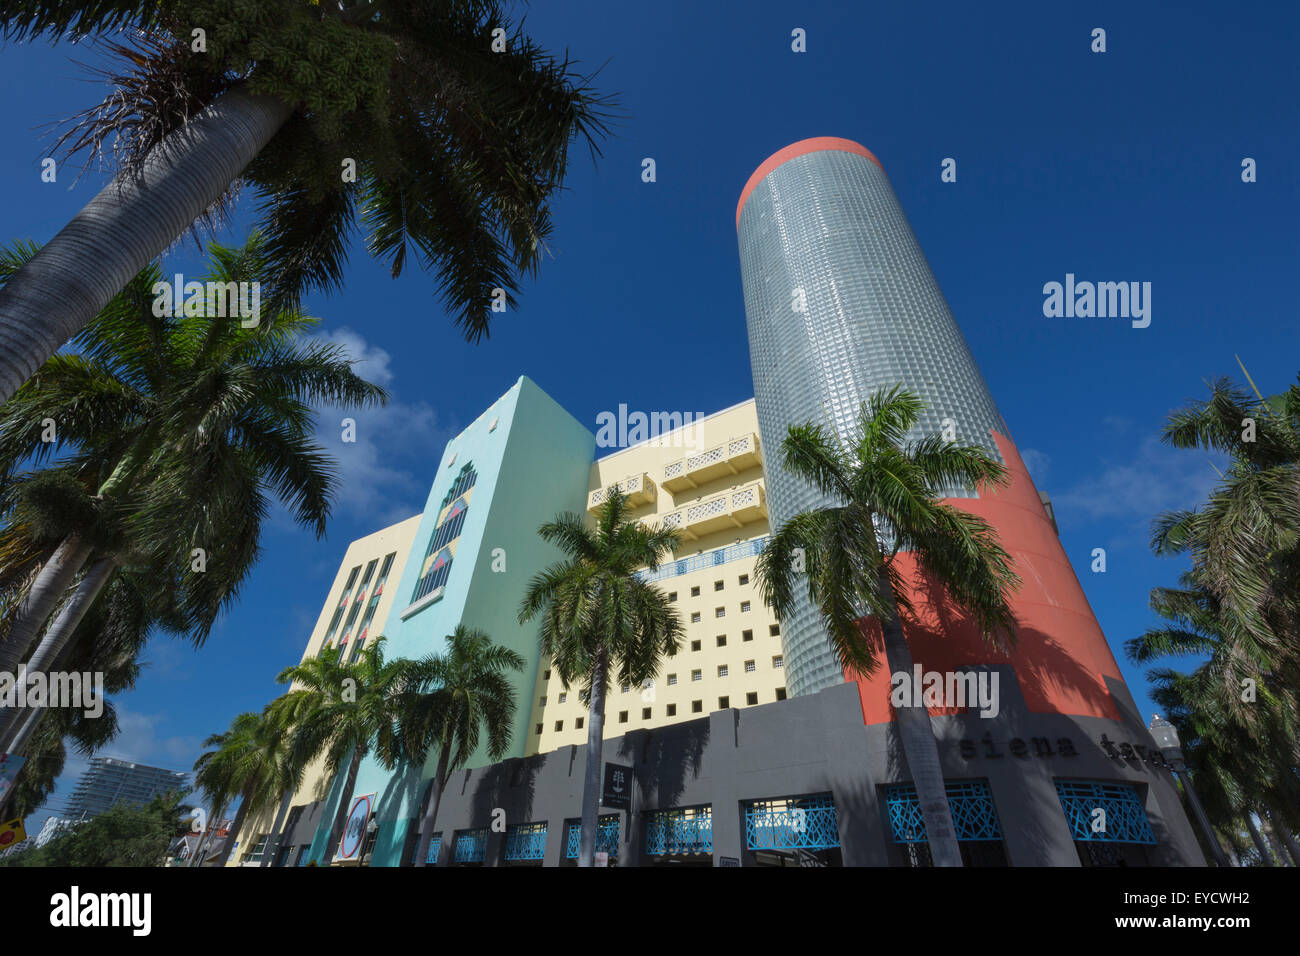 PALM TREES ART DECO STYLE BUILDING WASHINGTON AVENUE SOUTH BEACH MIAMI BEACH FLORIDA USA Stock Photo